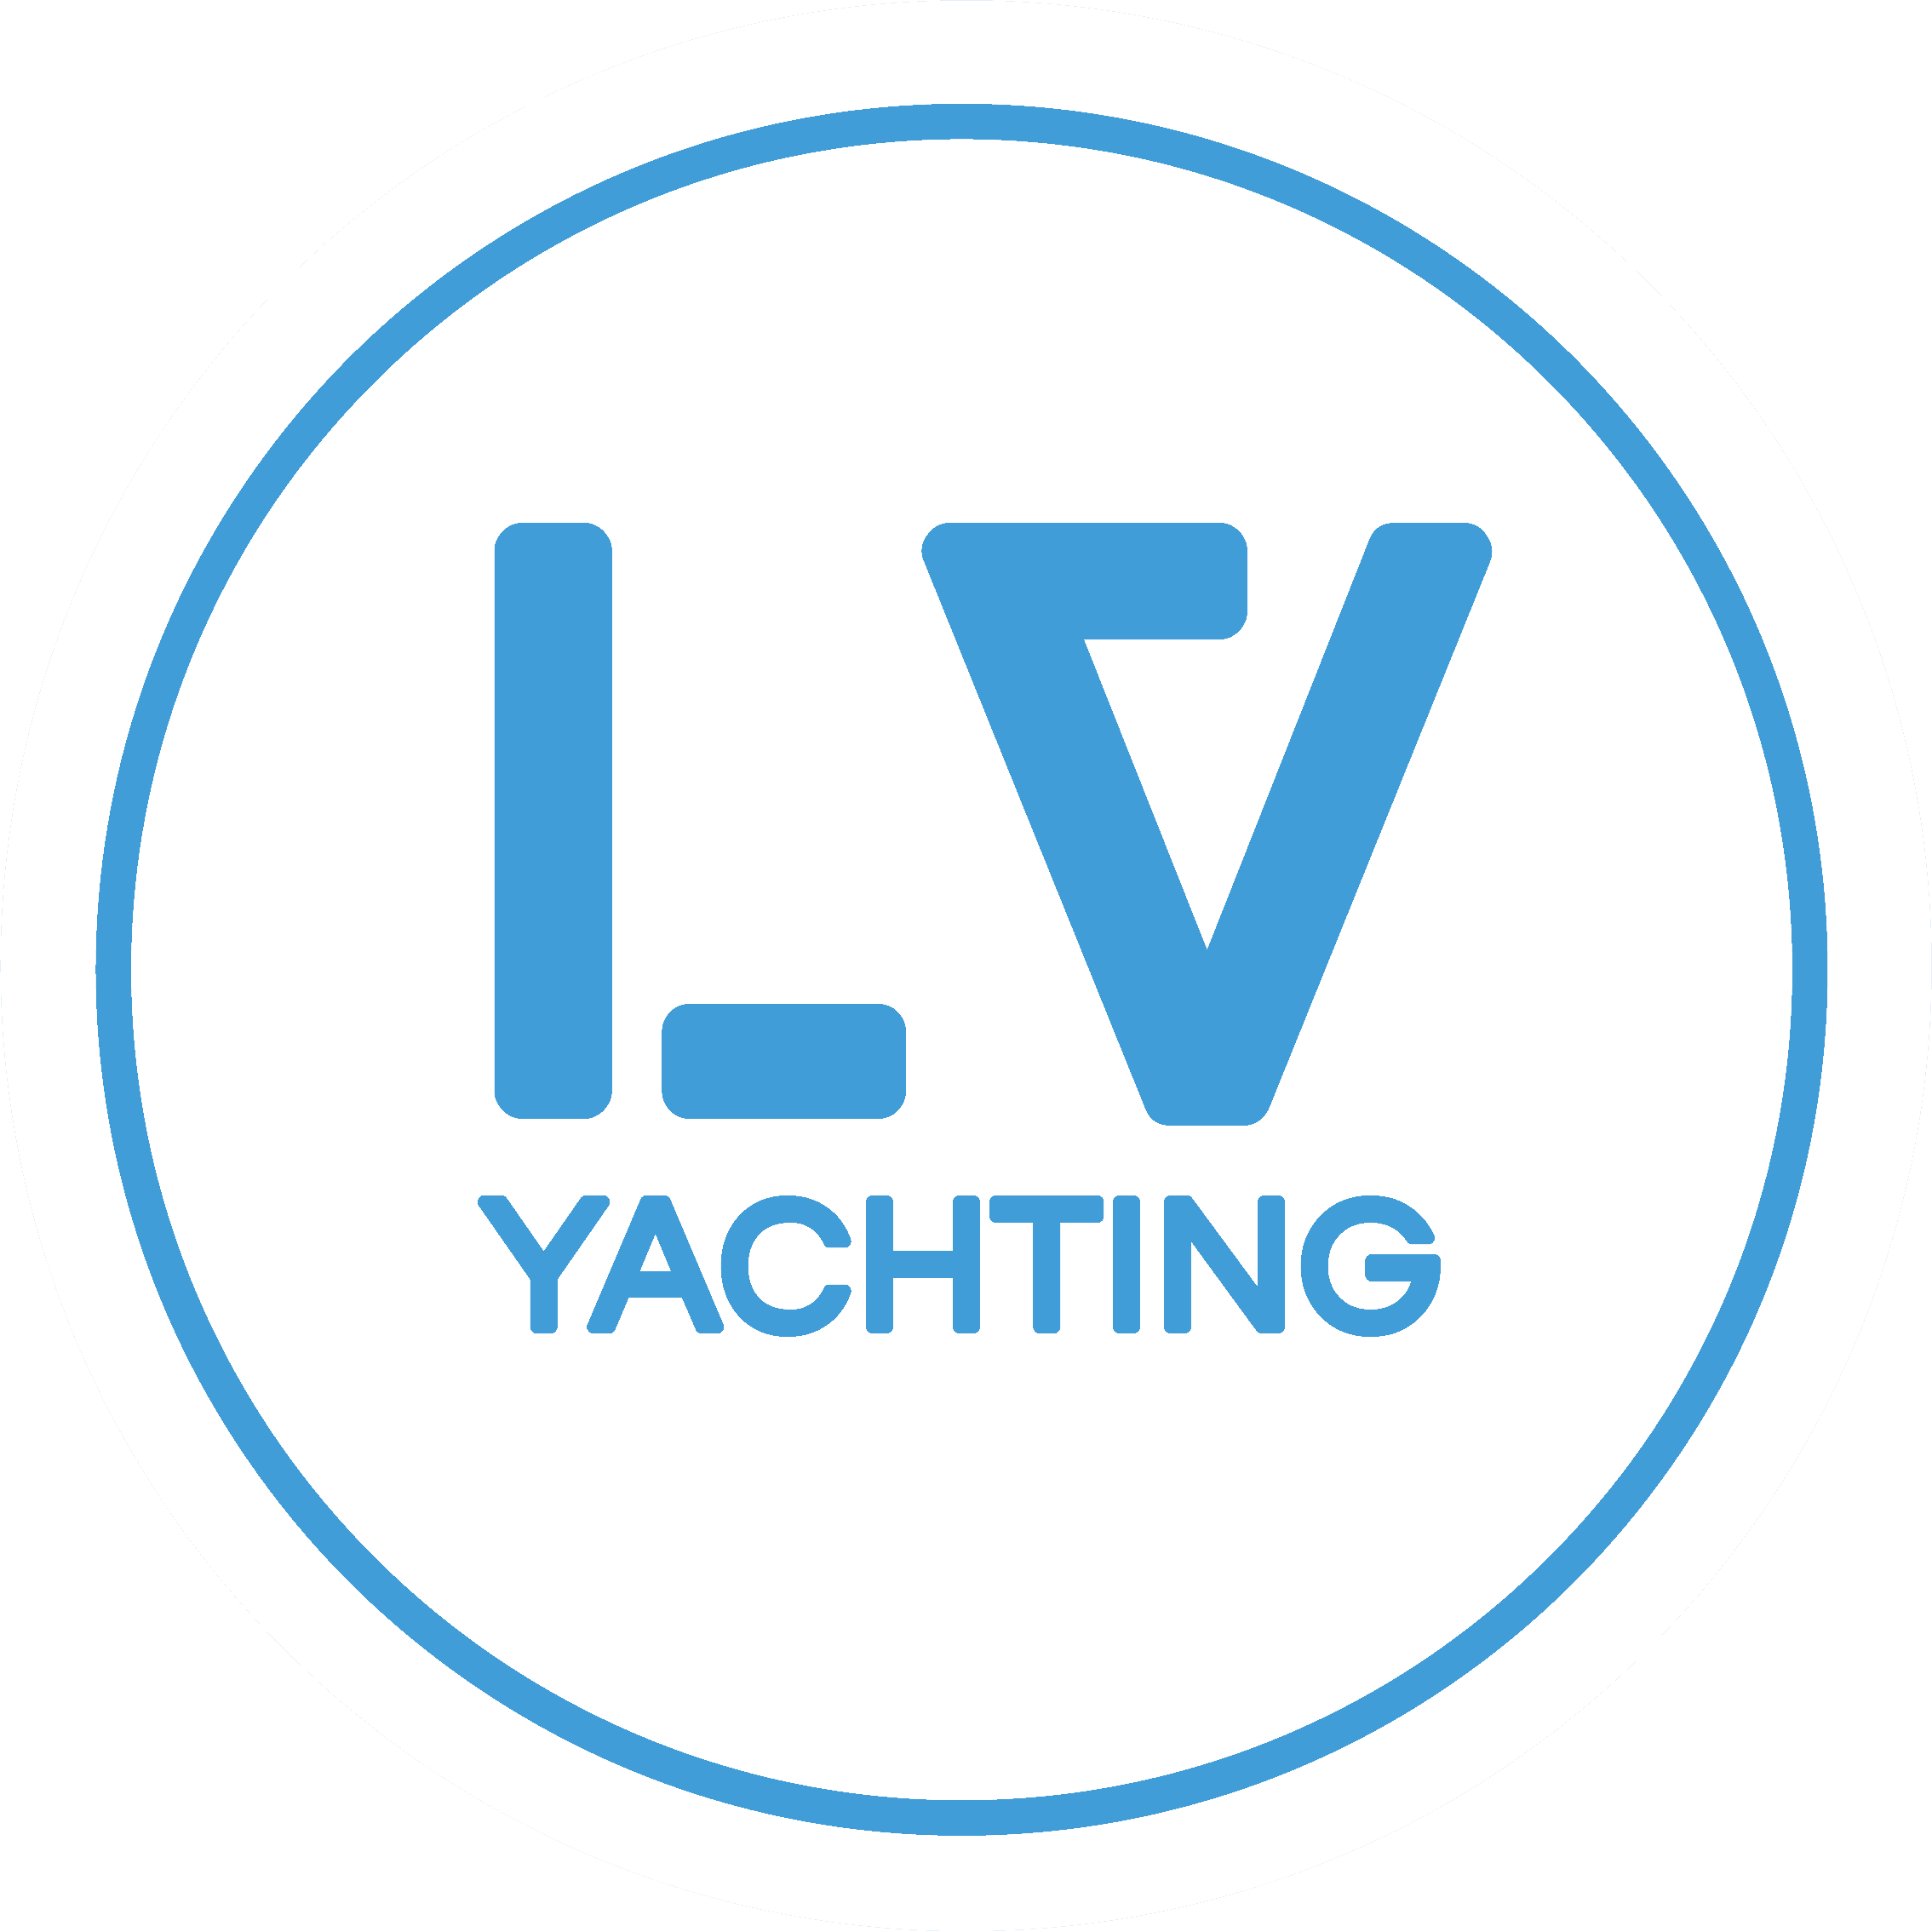 sail yacht aragon